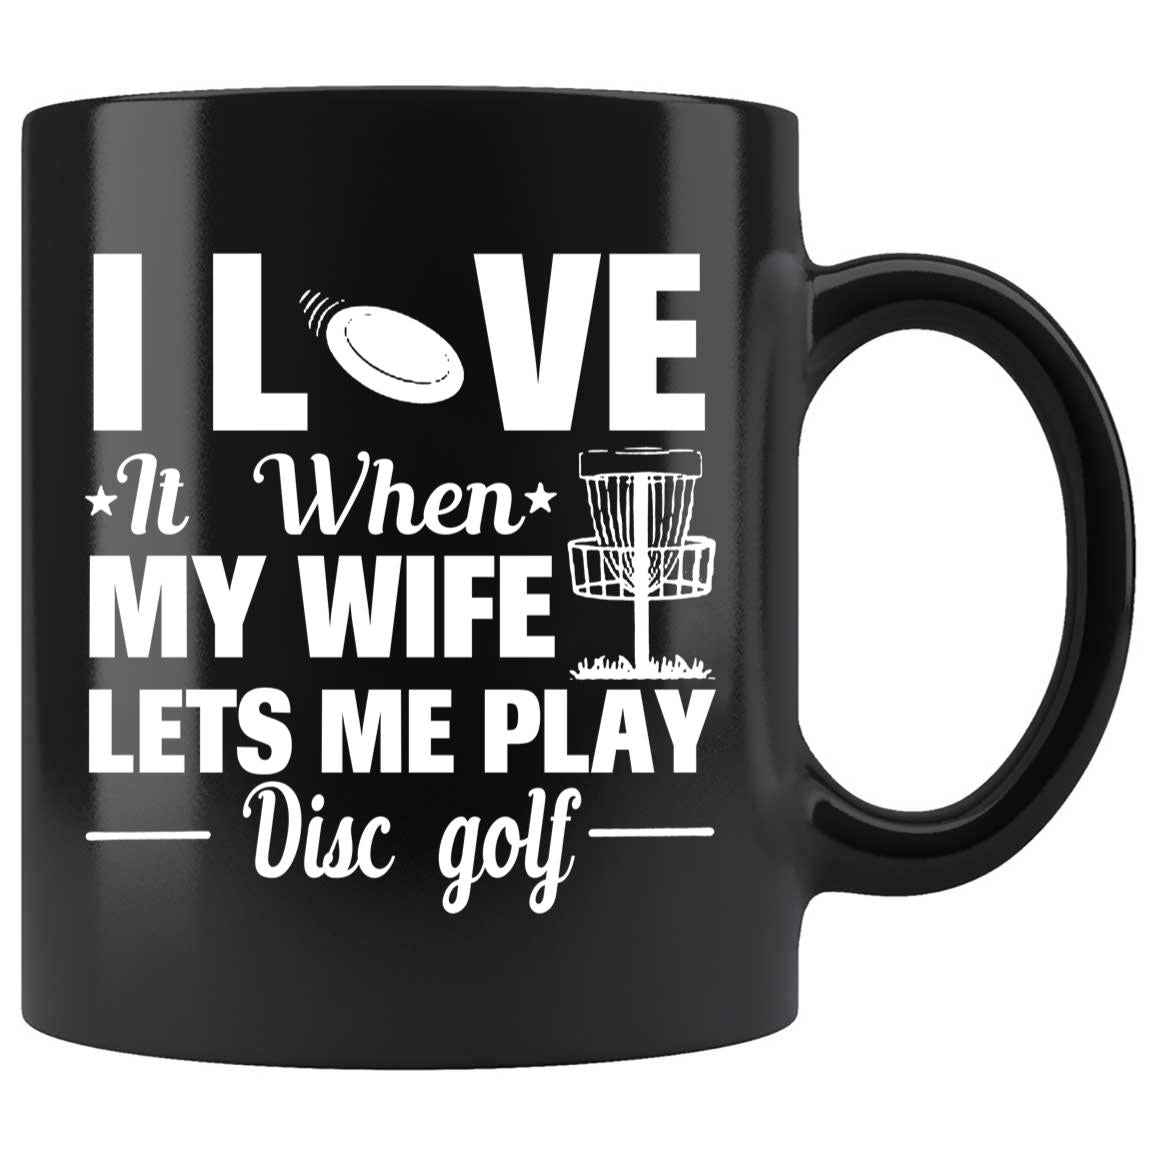 Skitongifts Coffee Mug Funny Ceramic Novelty I Love It When My Wife Lets Me Play Disc Golf pEvPNoJ